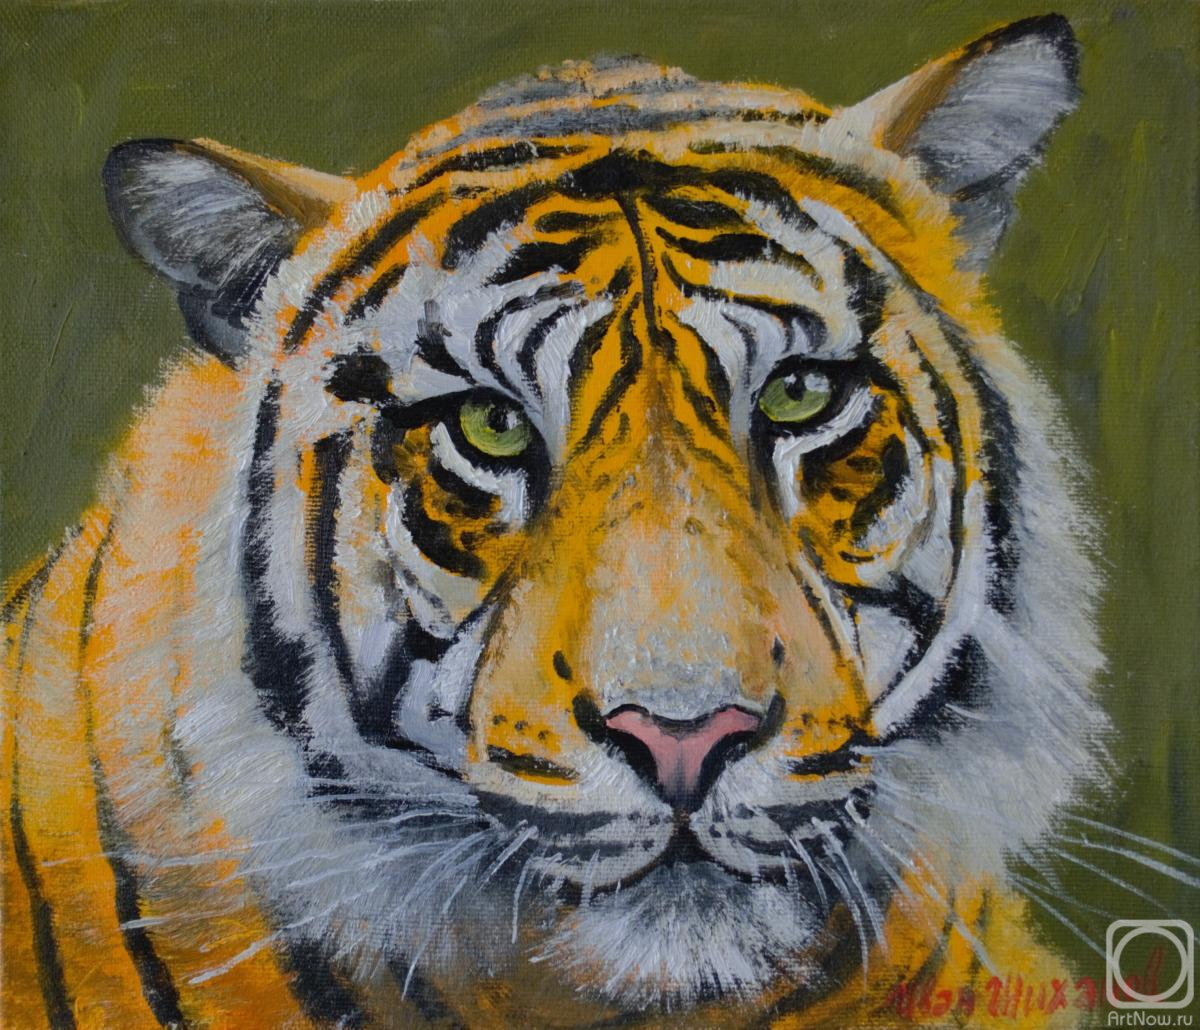 Shihanov Ivan. Portrait of the tiger